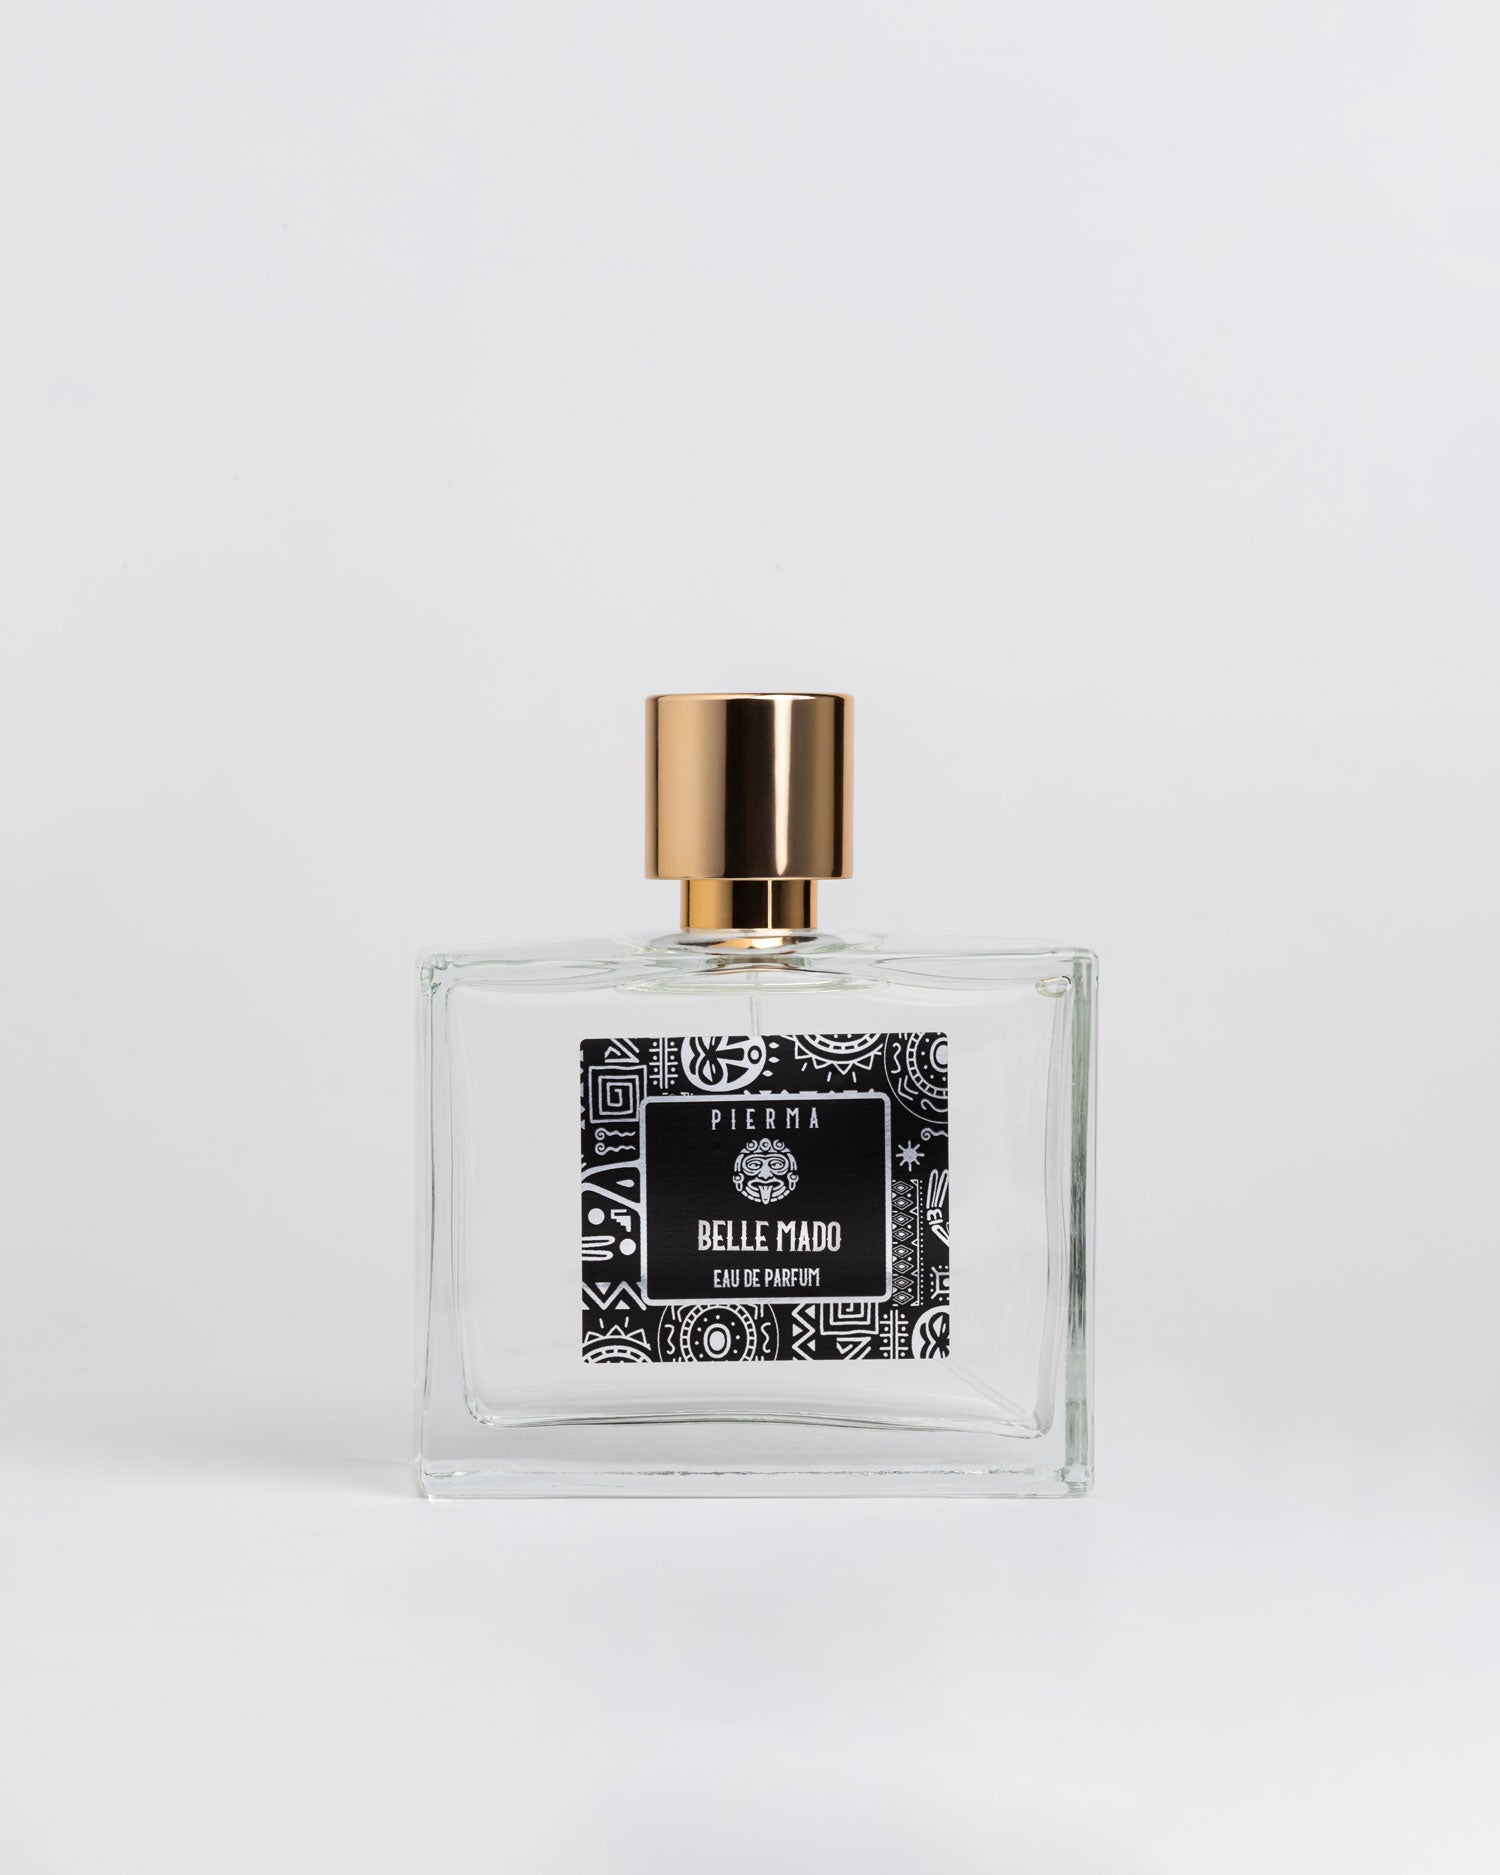 Vanille – MADO Parfums & Co ltd